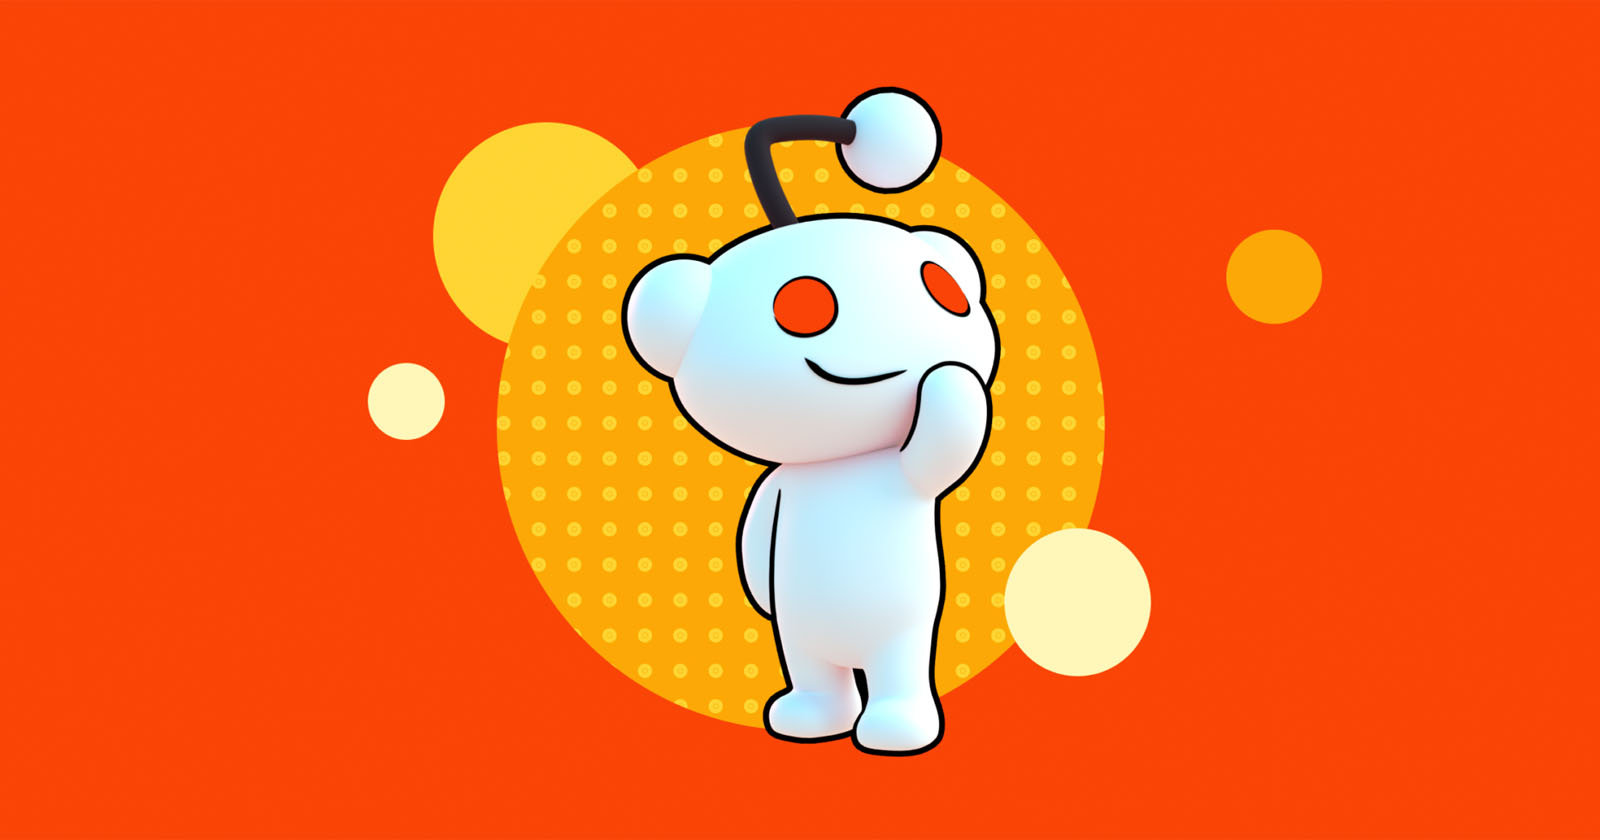 Reddit is Adding TikTok-Like Video Feed | PetaPixel